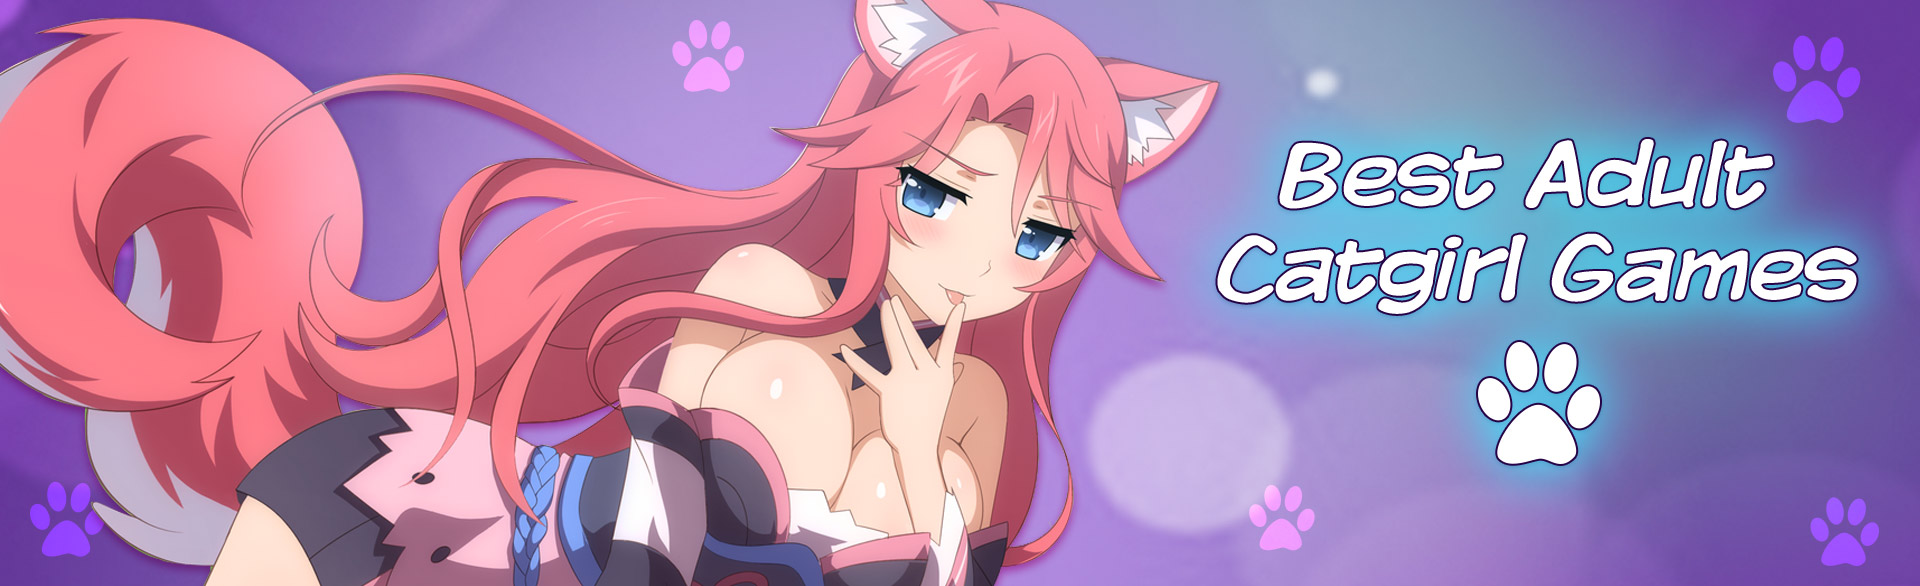 Best Adult Catgirl Games!